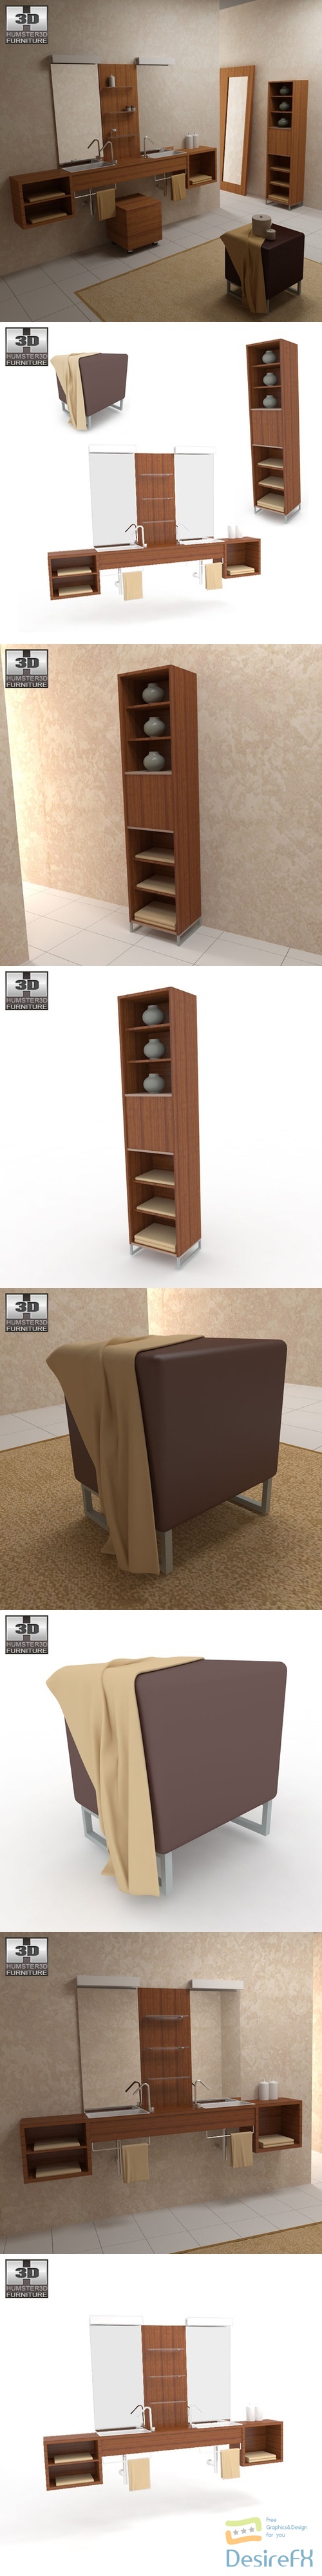 Bathroom Furniture 02 Set 3D Model